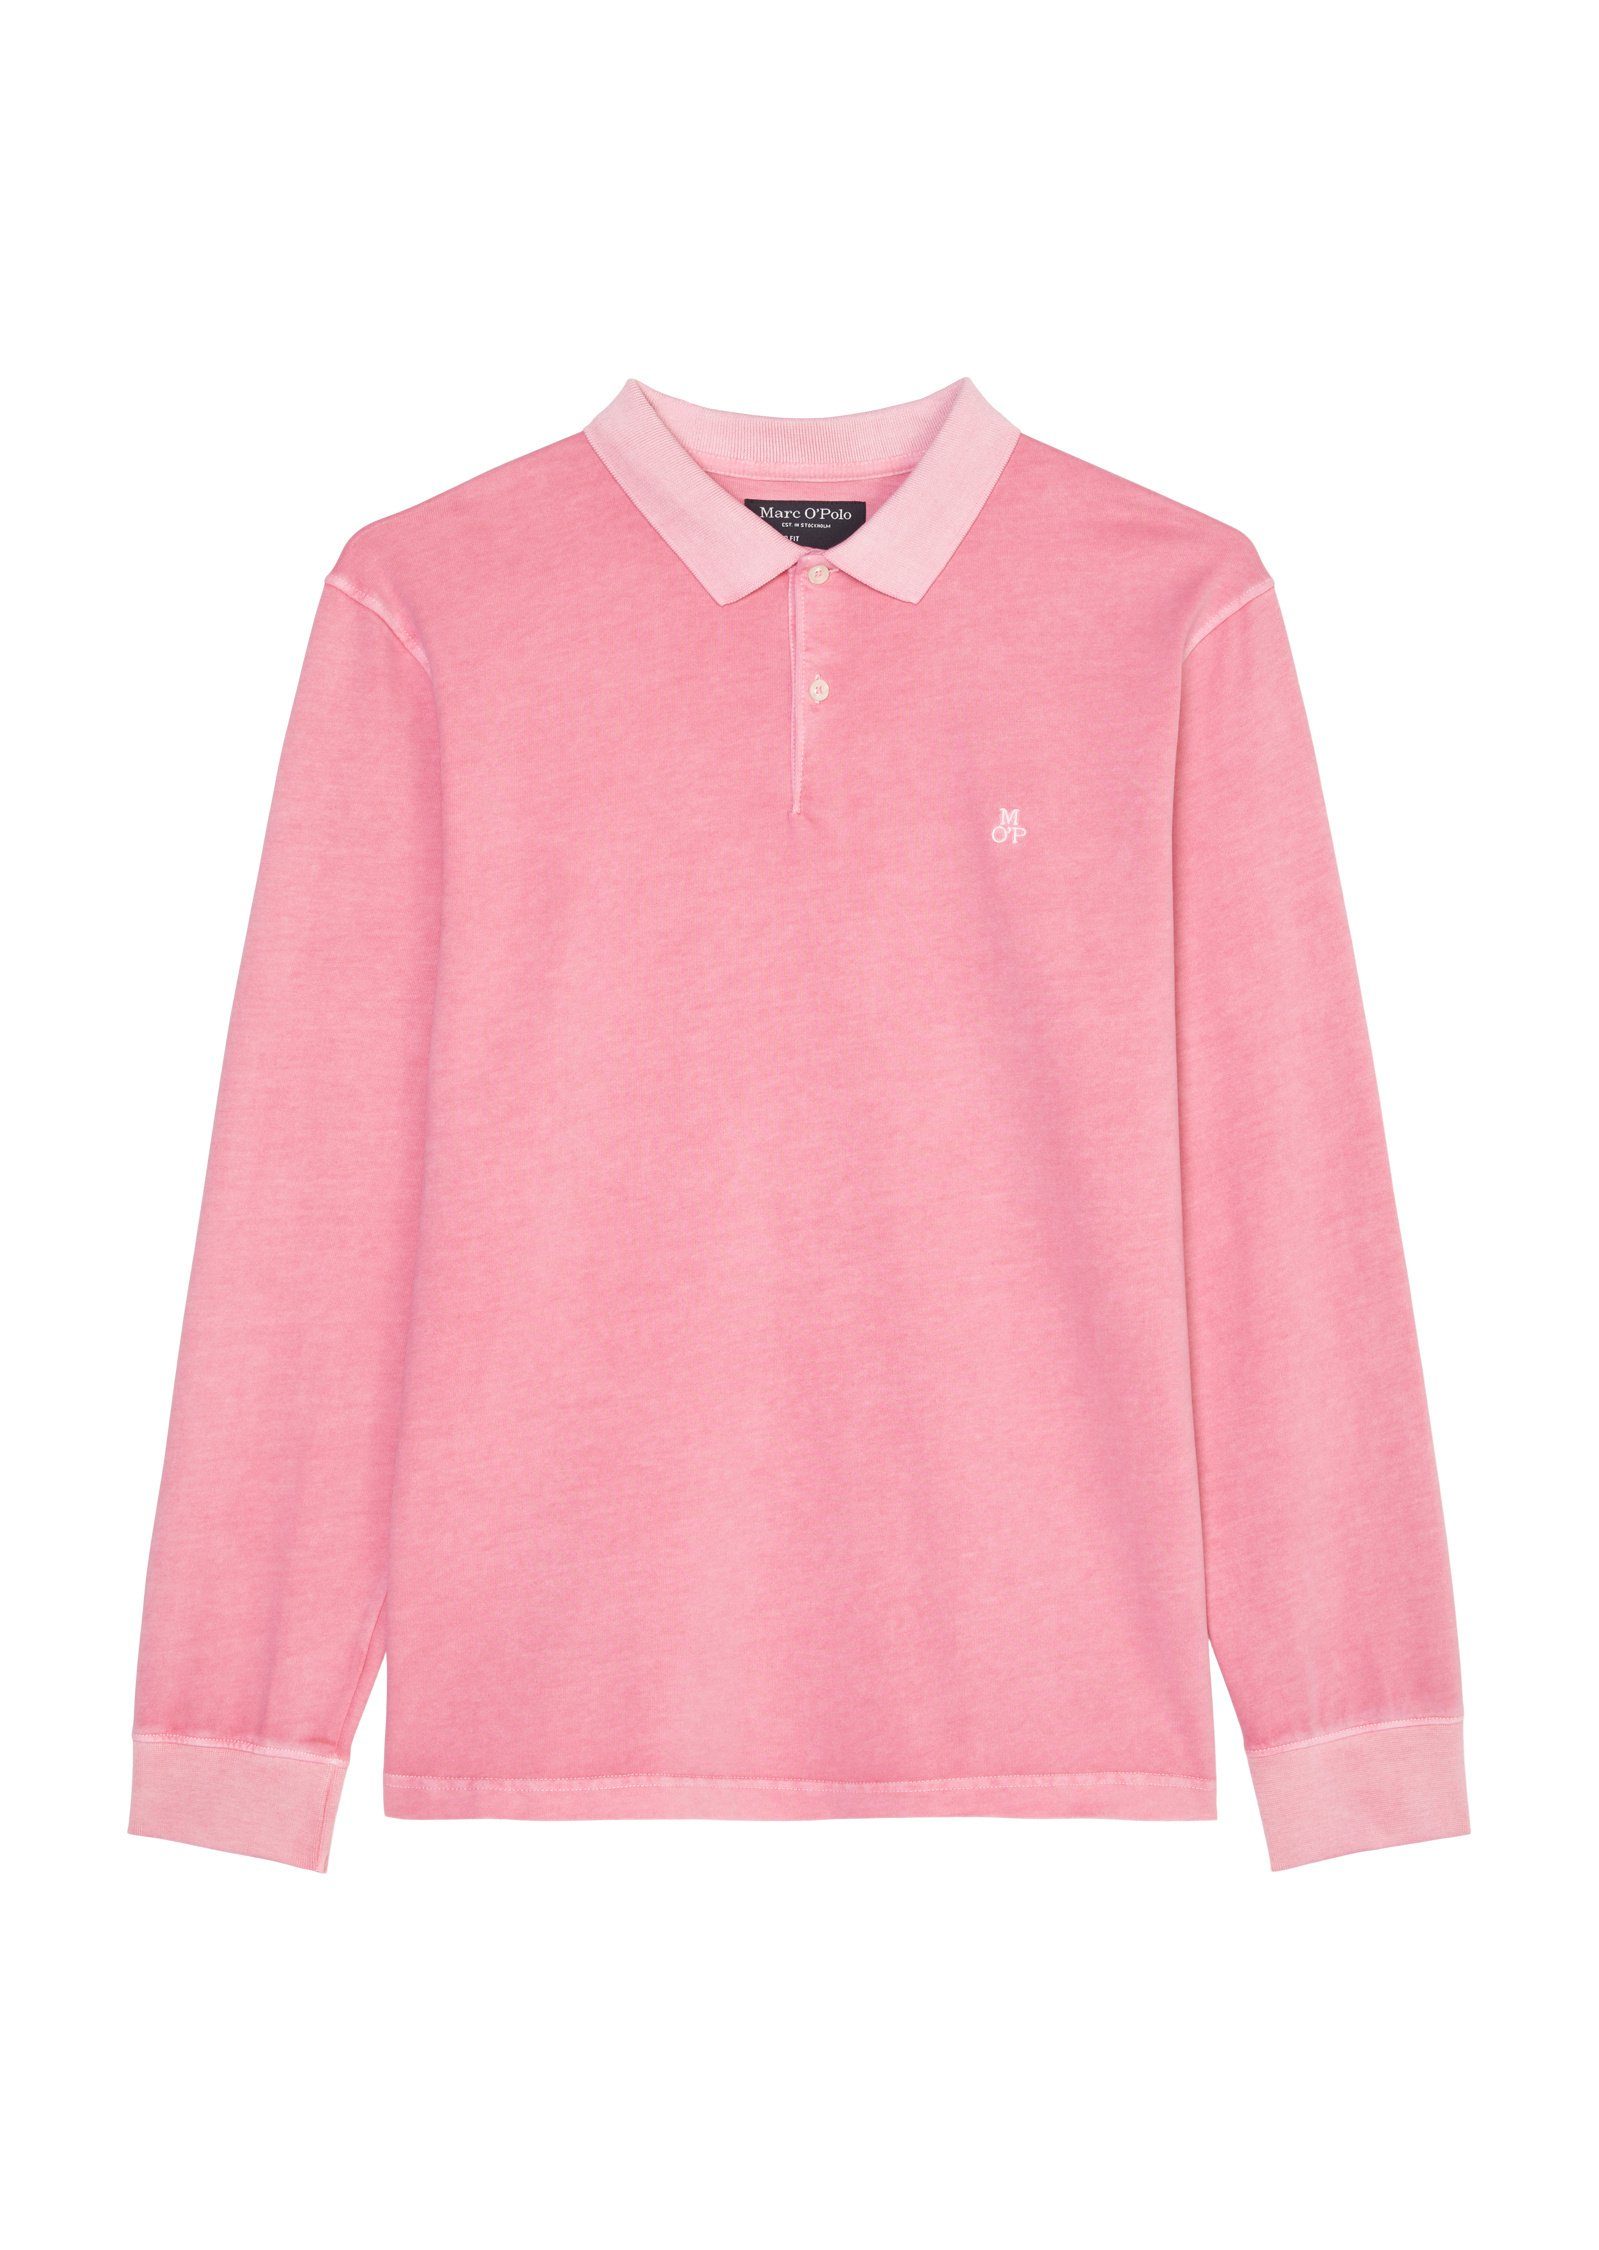 Marc O'Polo in Soft-Touch-Jersey-Qualität schwerer Langarm-Poloshirt rosa